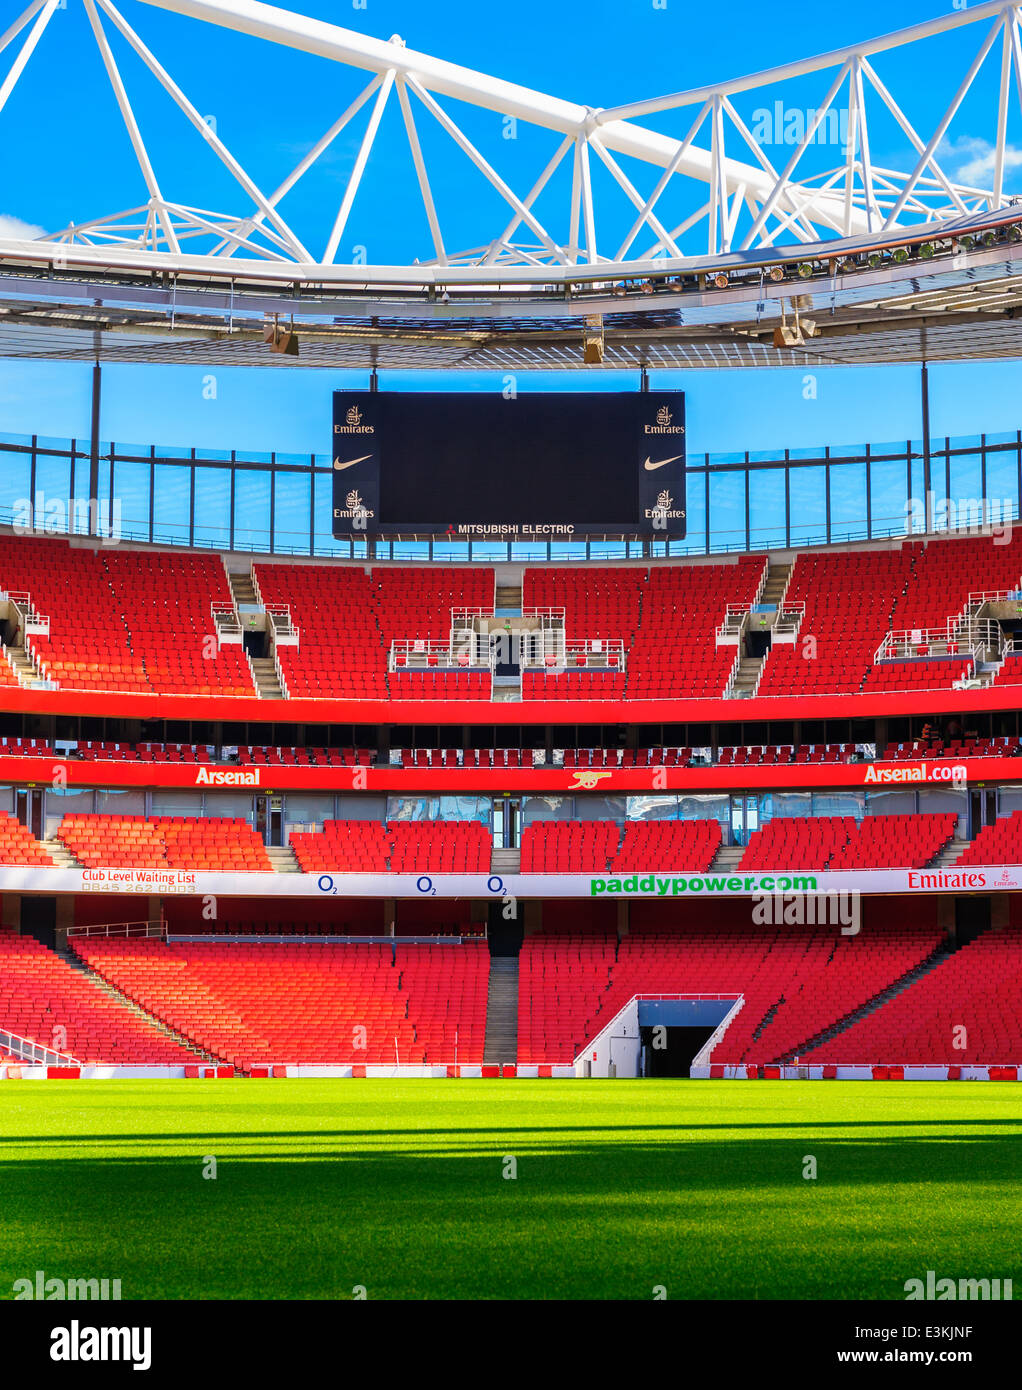 Pitch view and Mitsubishi Electric scoreboard at The Emirates. Arsenal Football Club Stock Photo